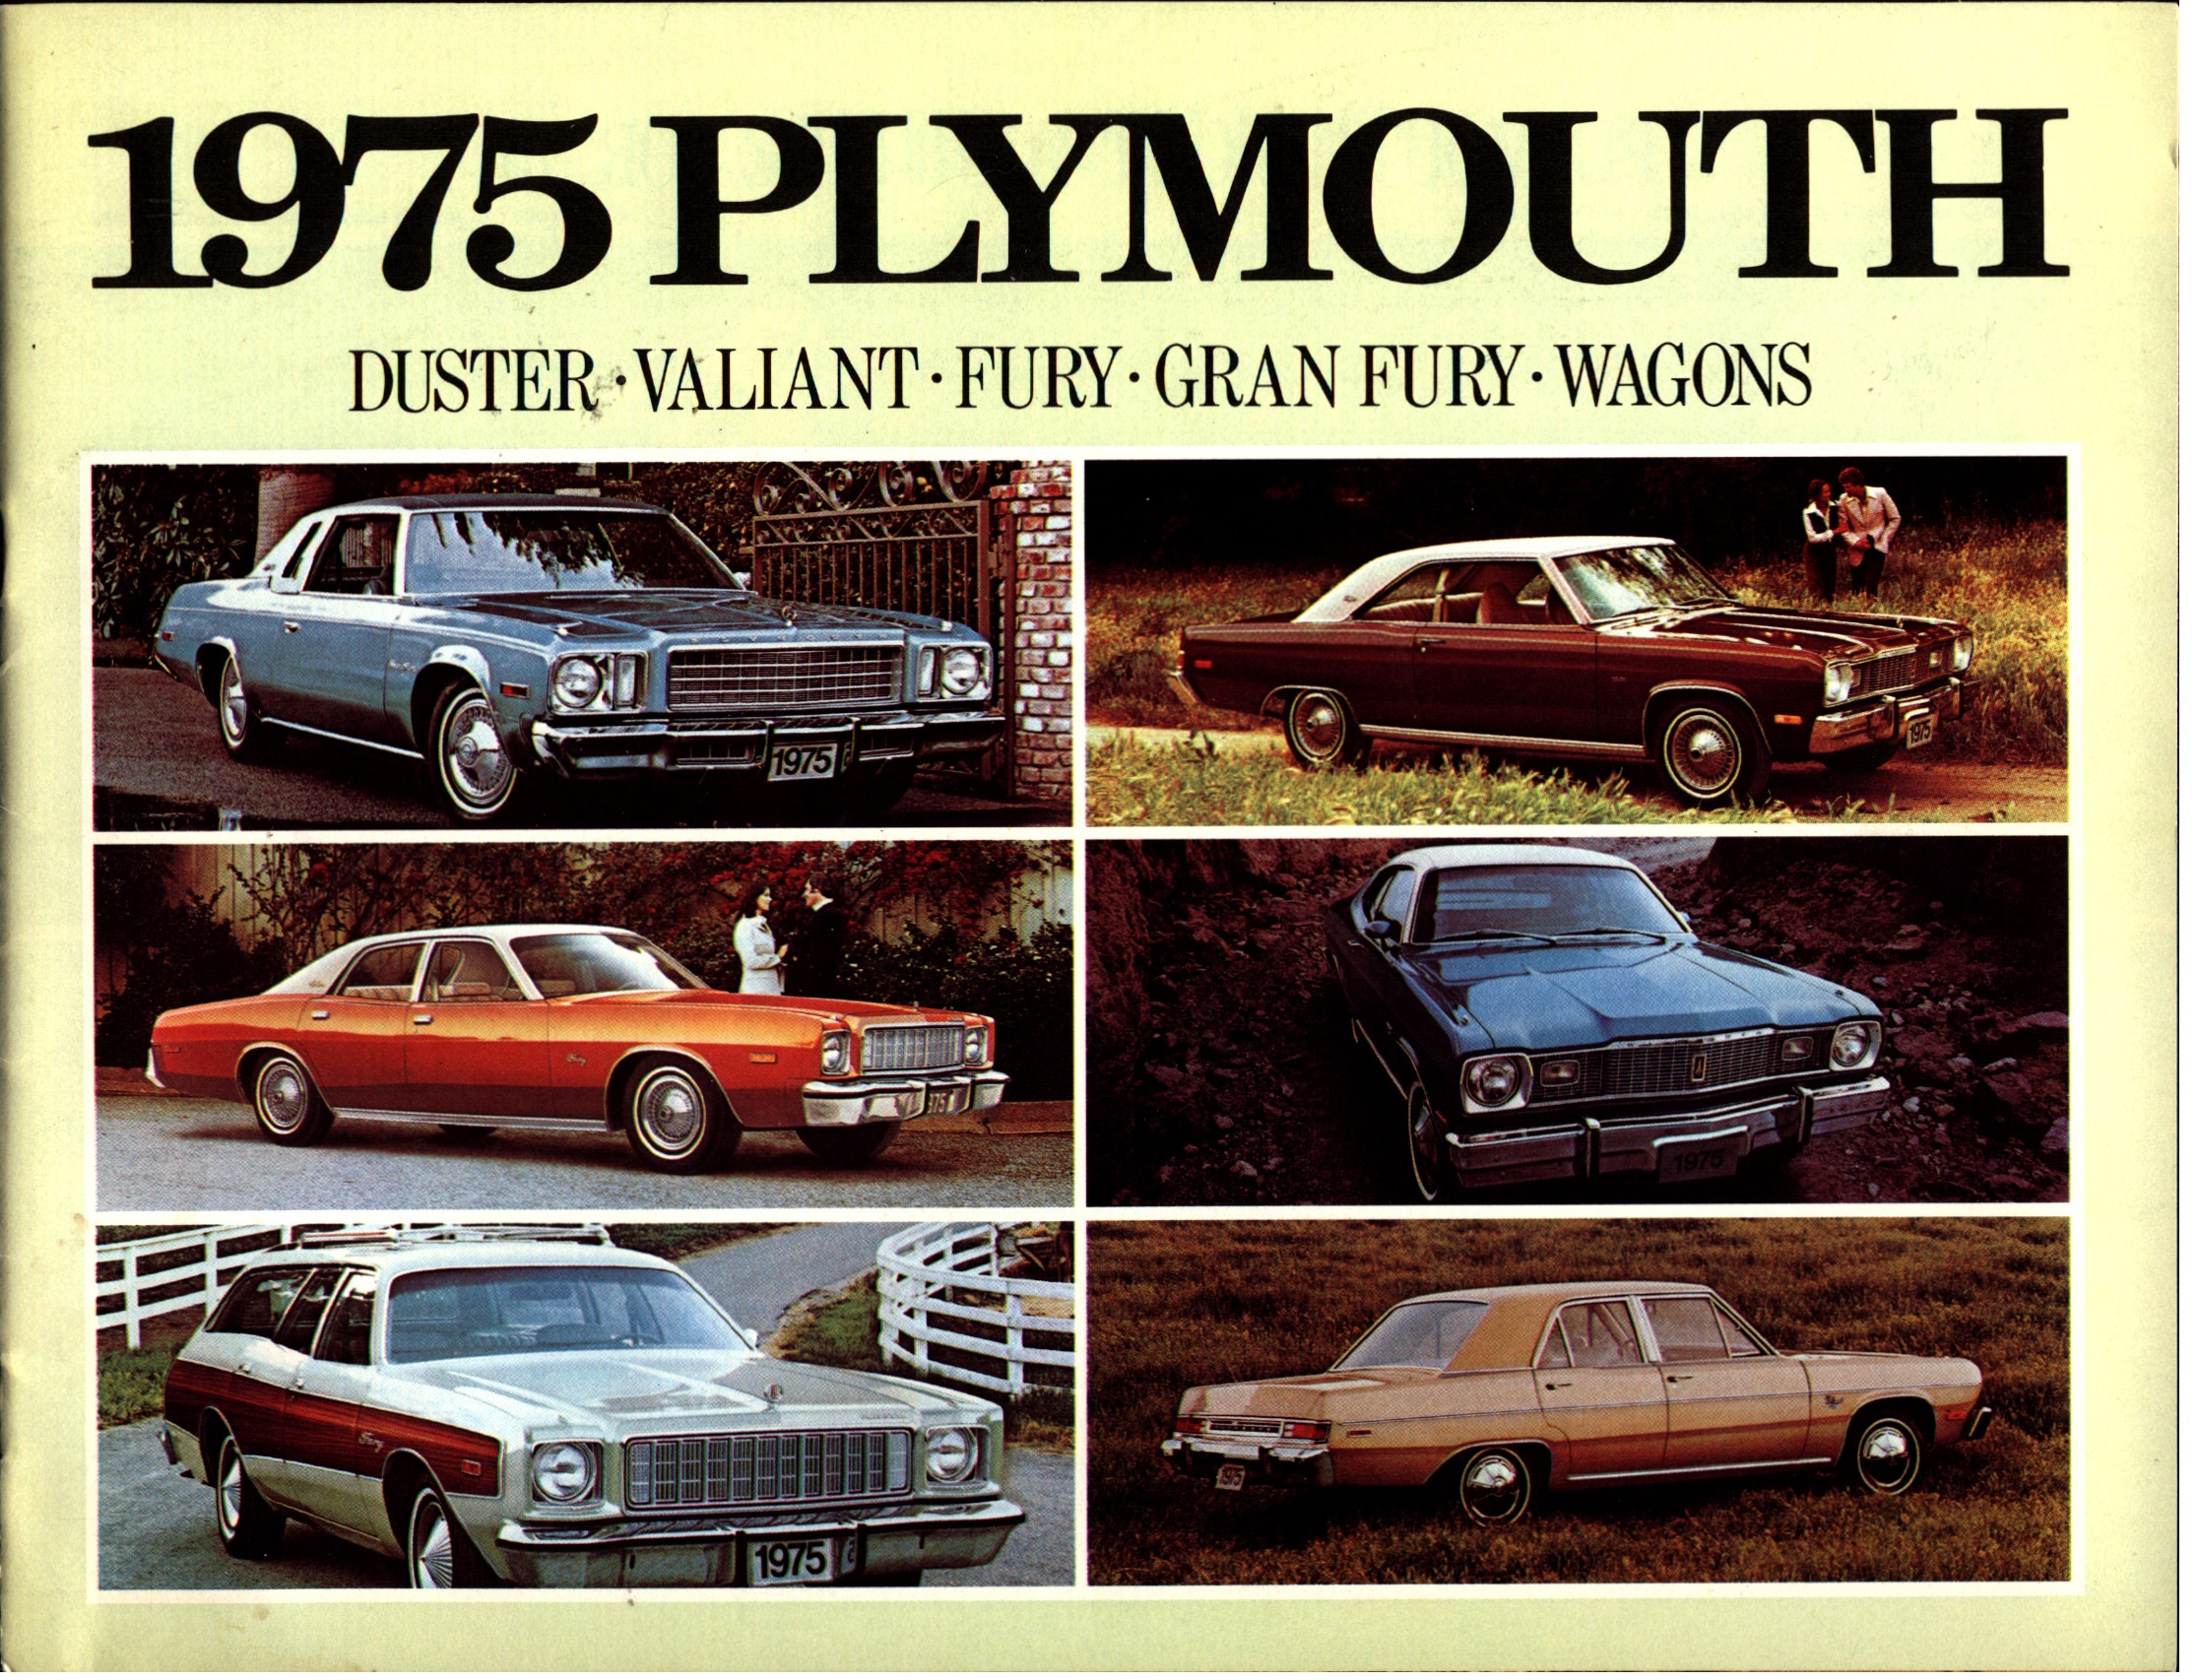 1975 Plymouth Full Line Brochure (Cdn) 01